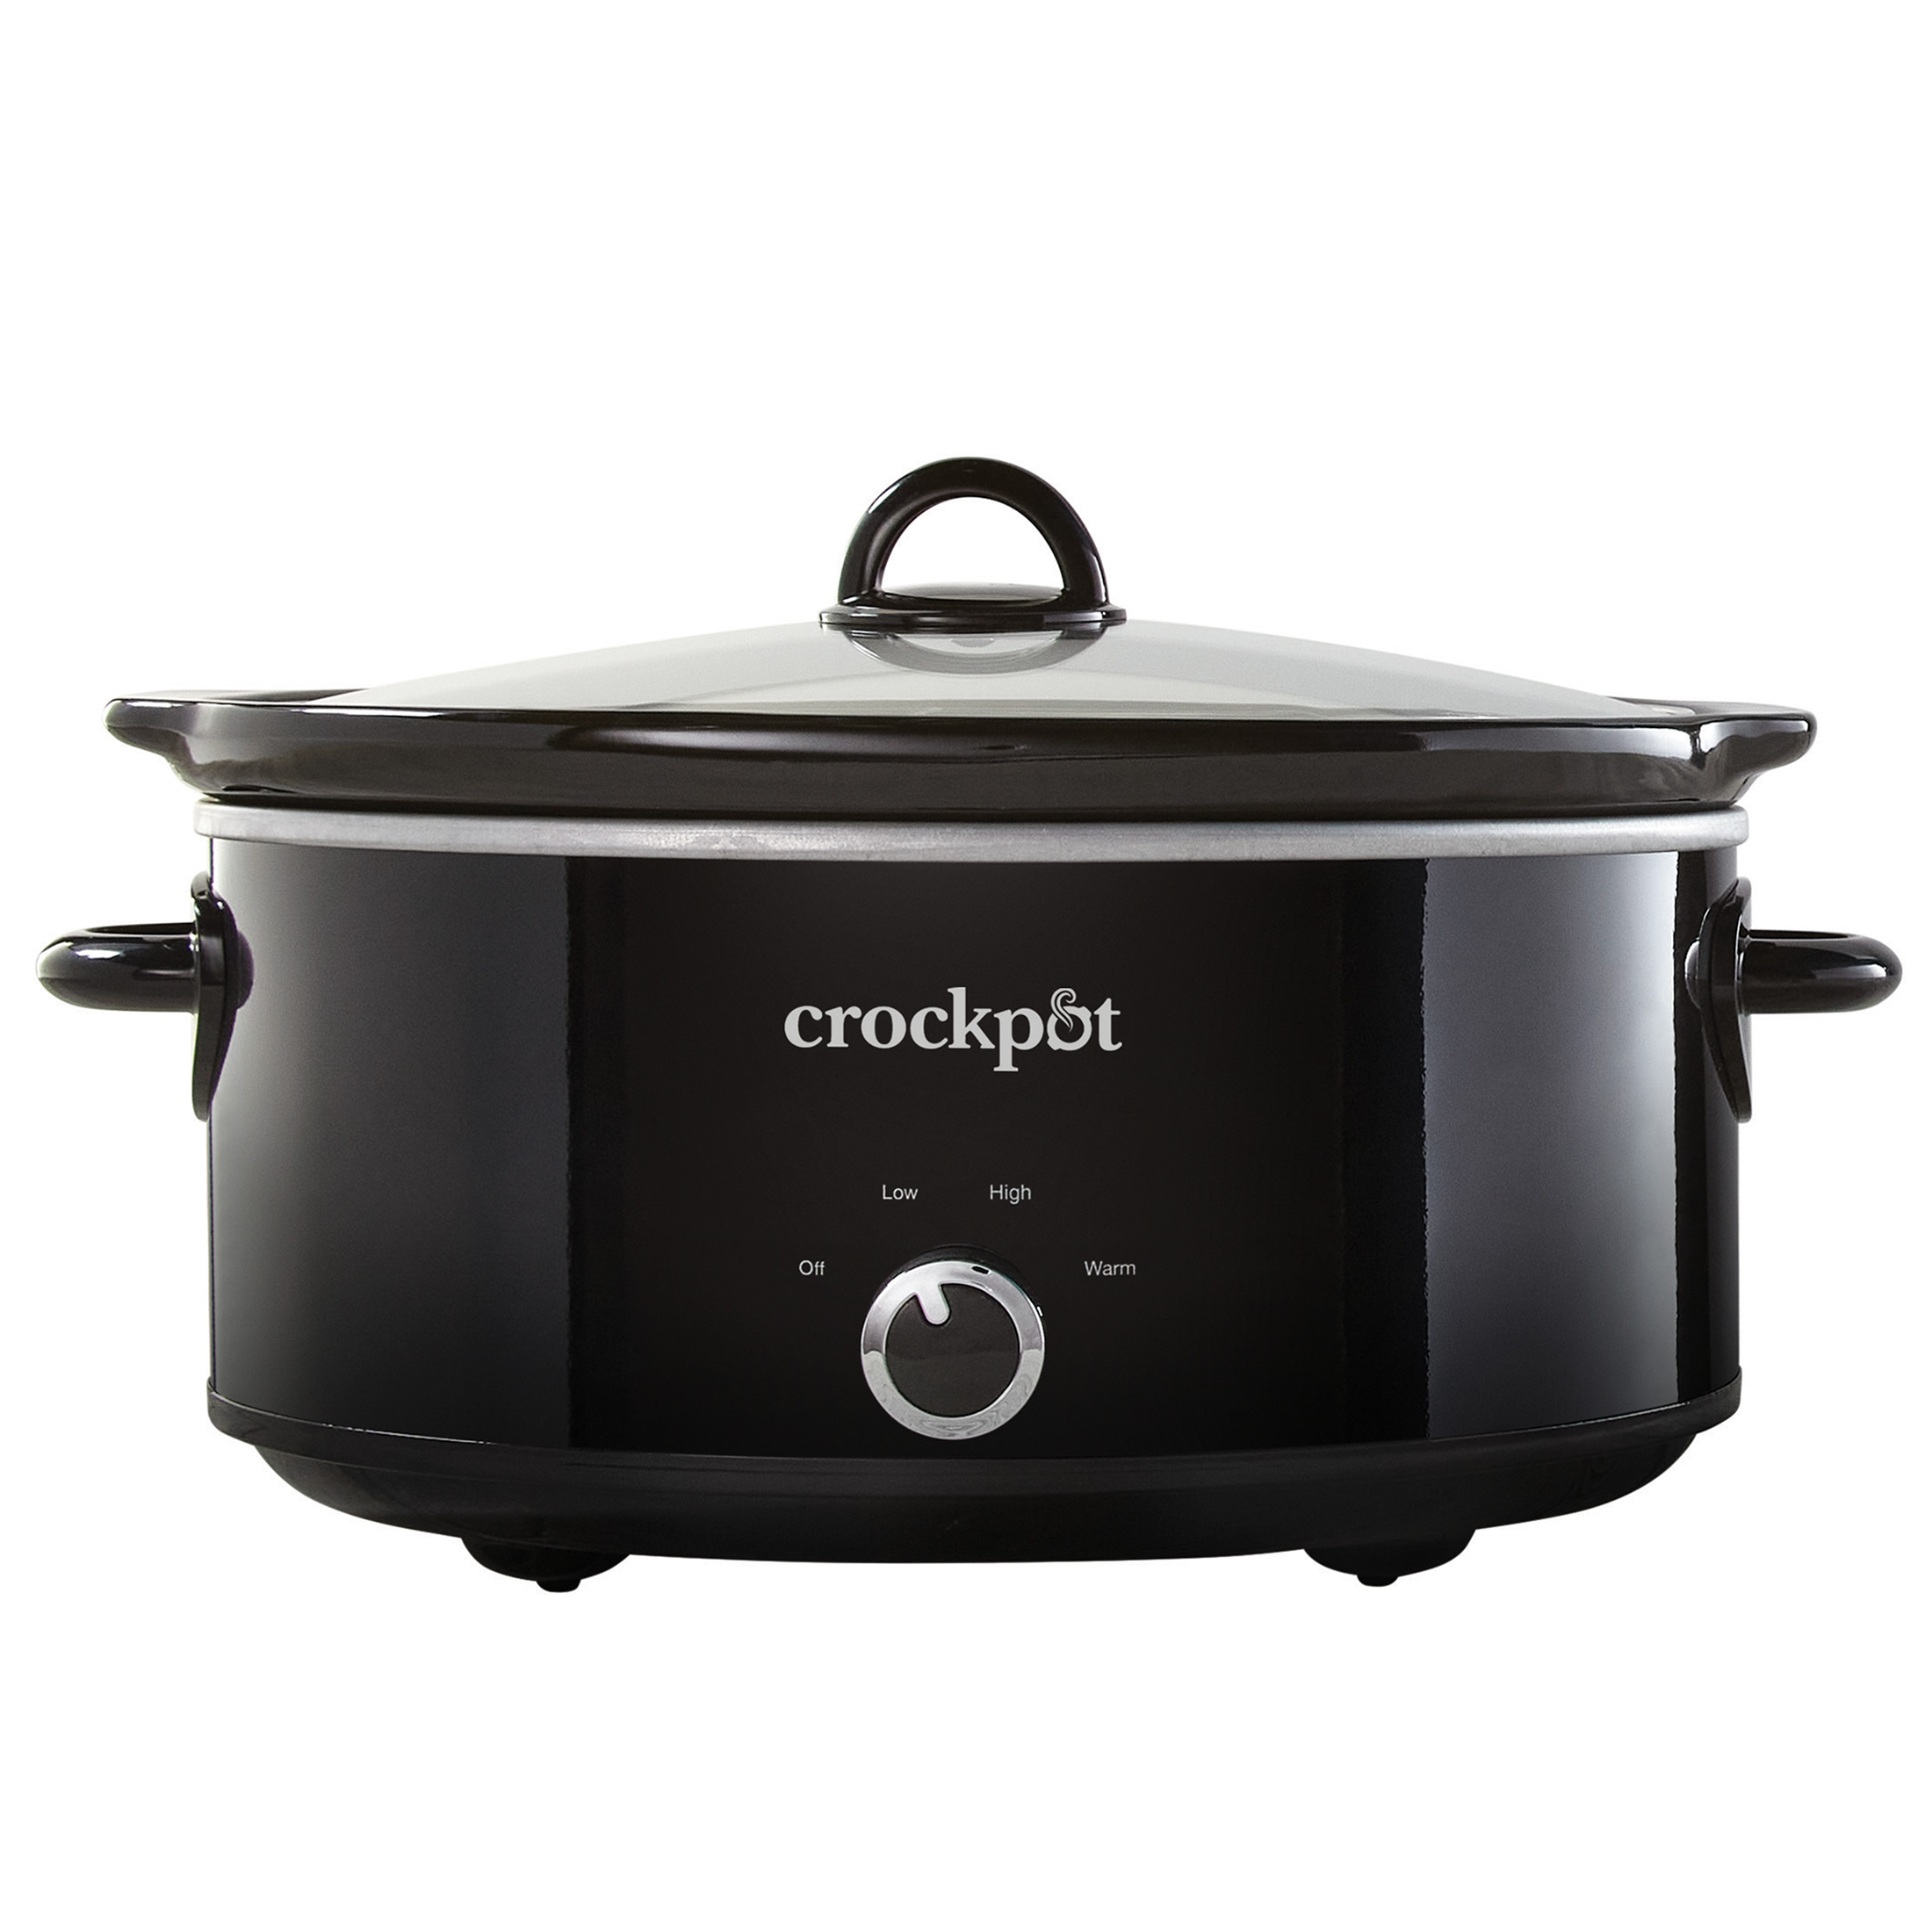 Crock-Pot 7-Quart Manual Slow Cooker, Black - image 1 of 8